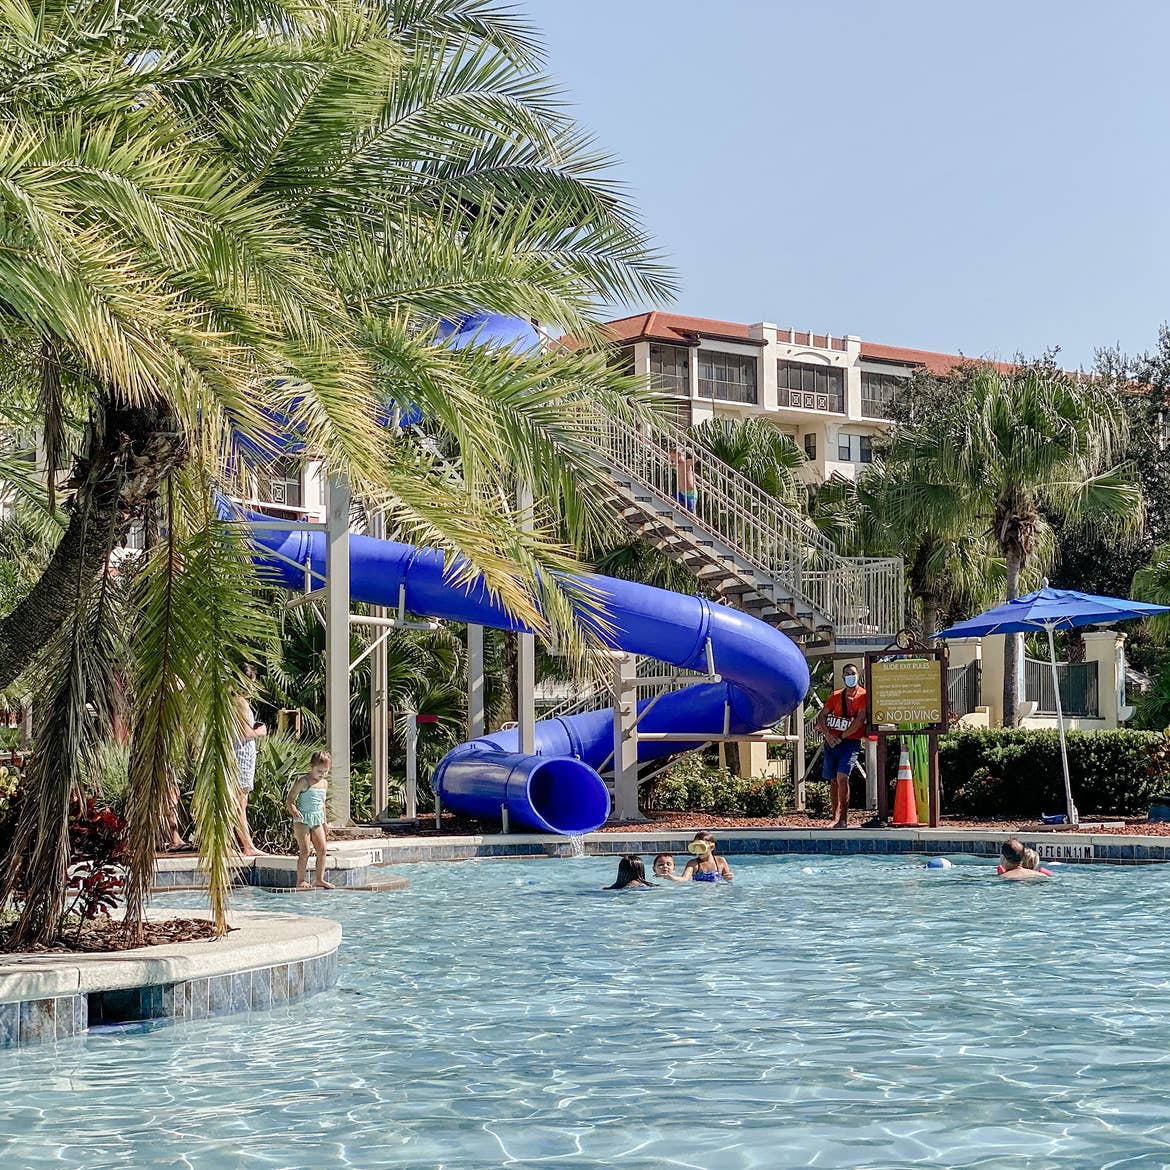 Guests enjoy a swim in our pool at Orange Lake Resort in Florida.